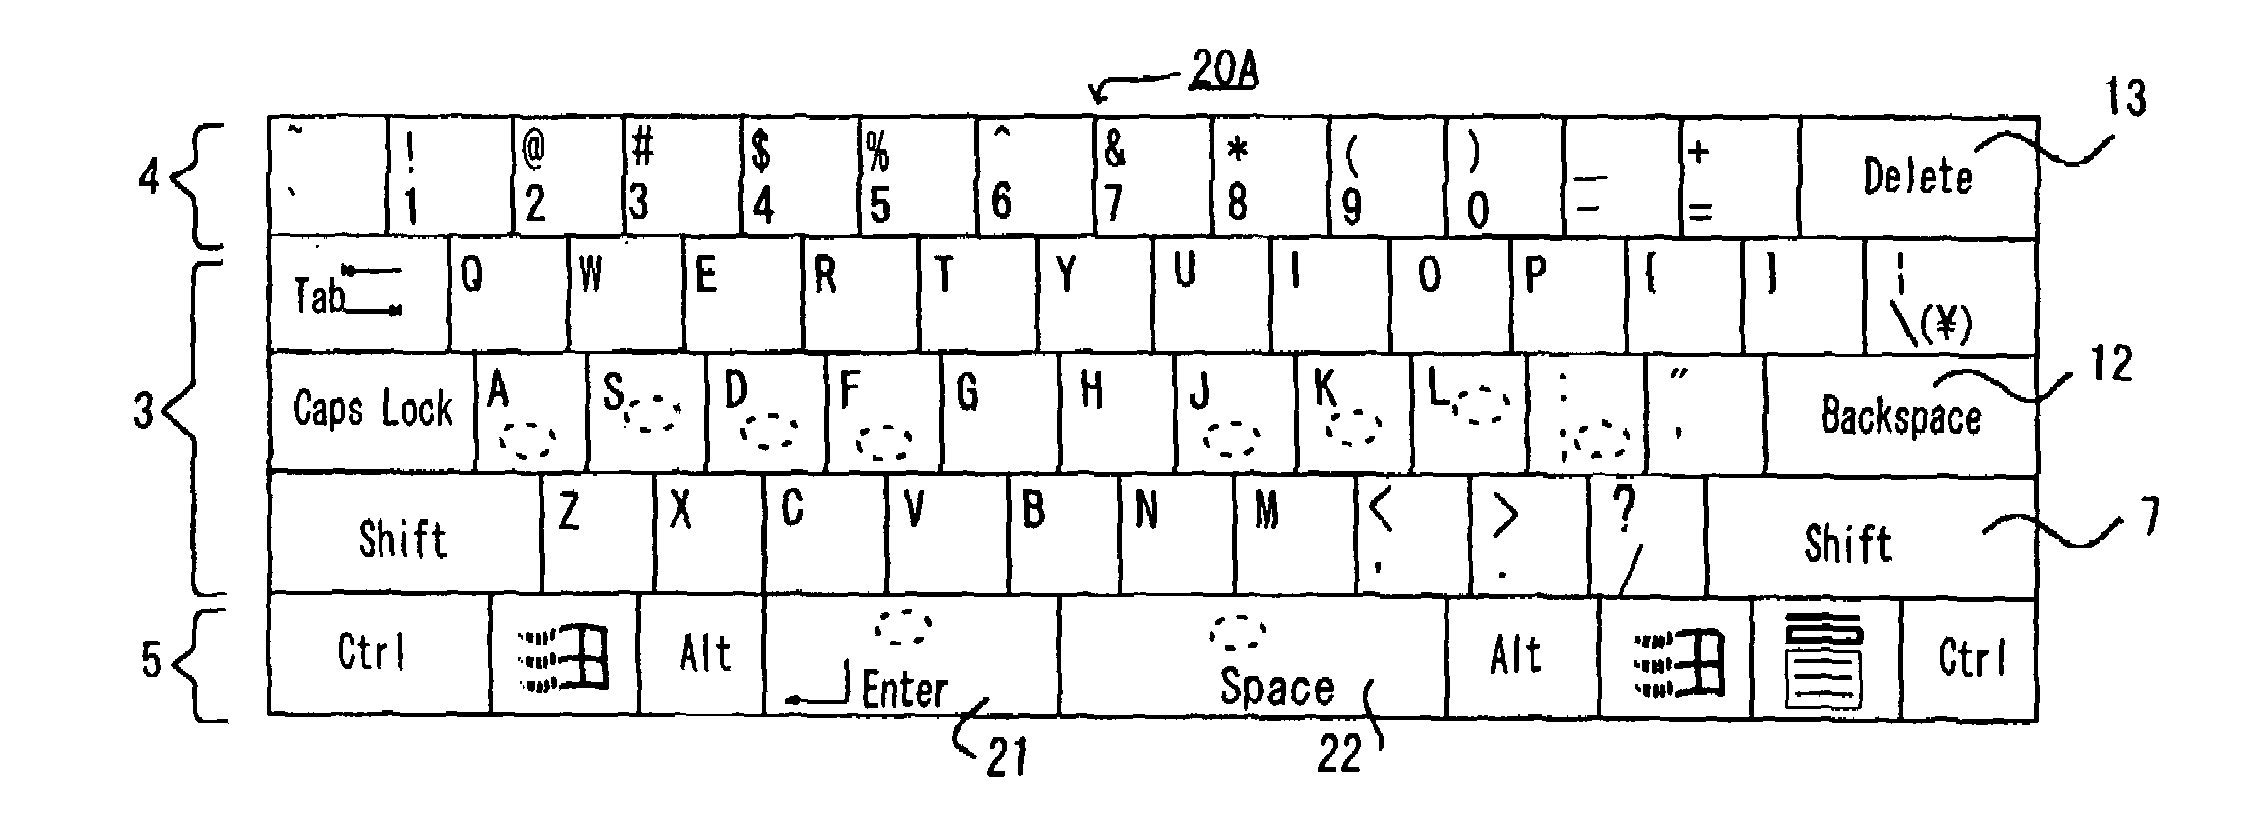 Character input keyboard